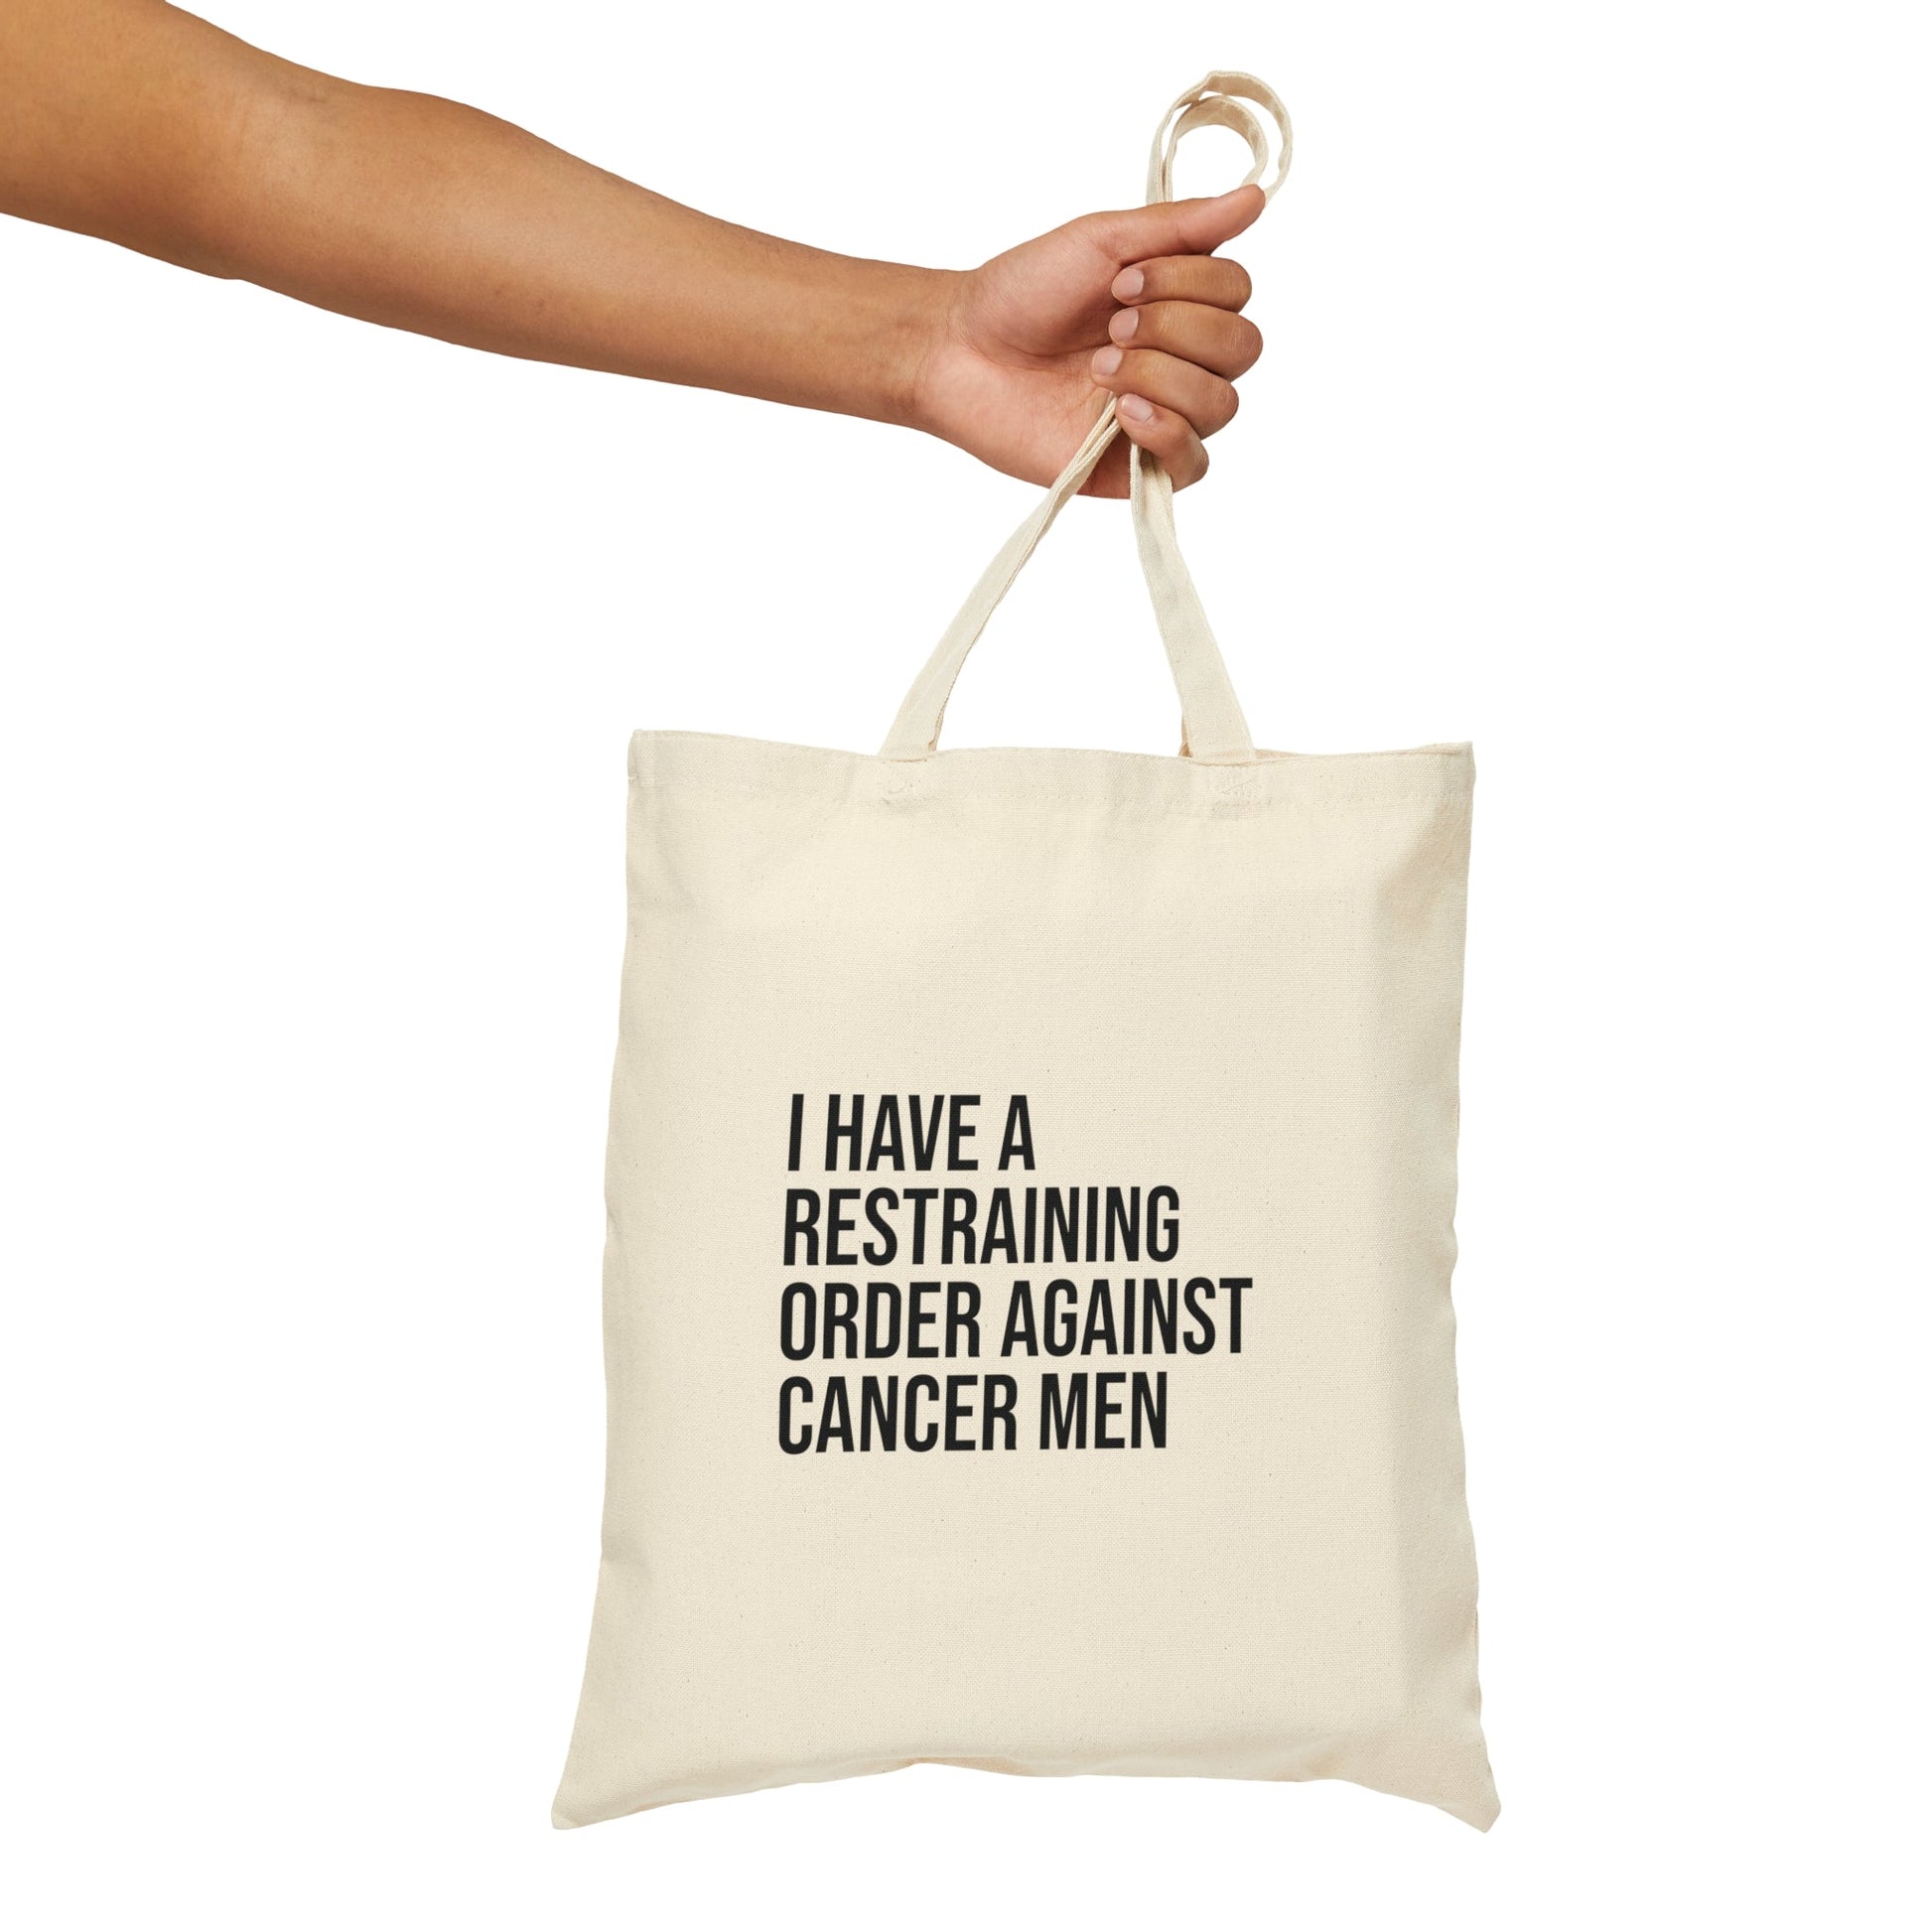 Restraining Order Against Cancer Men Tote Bag - Existential Quotes